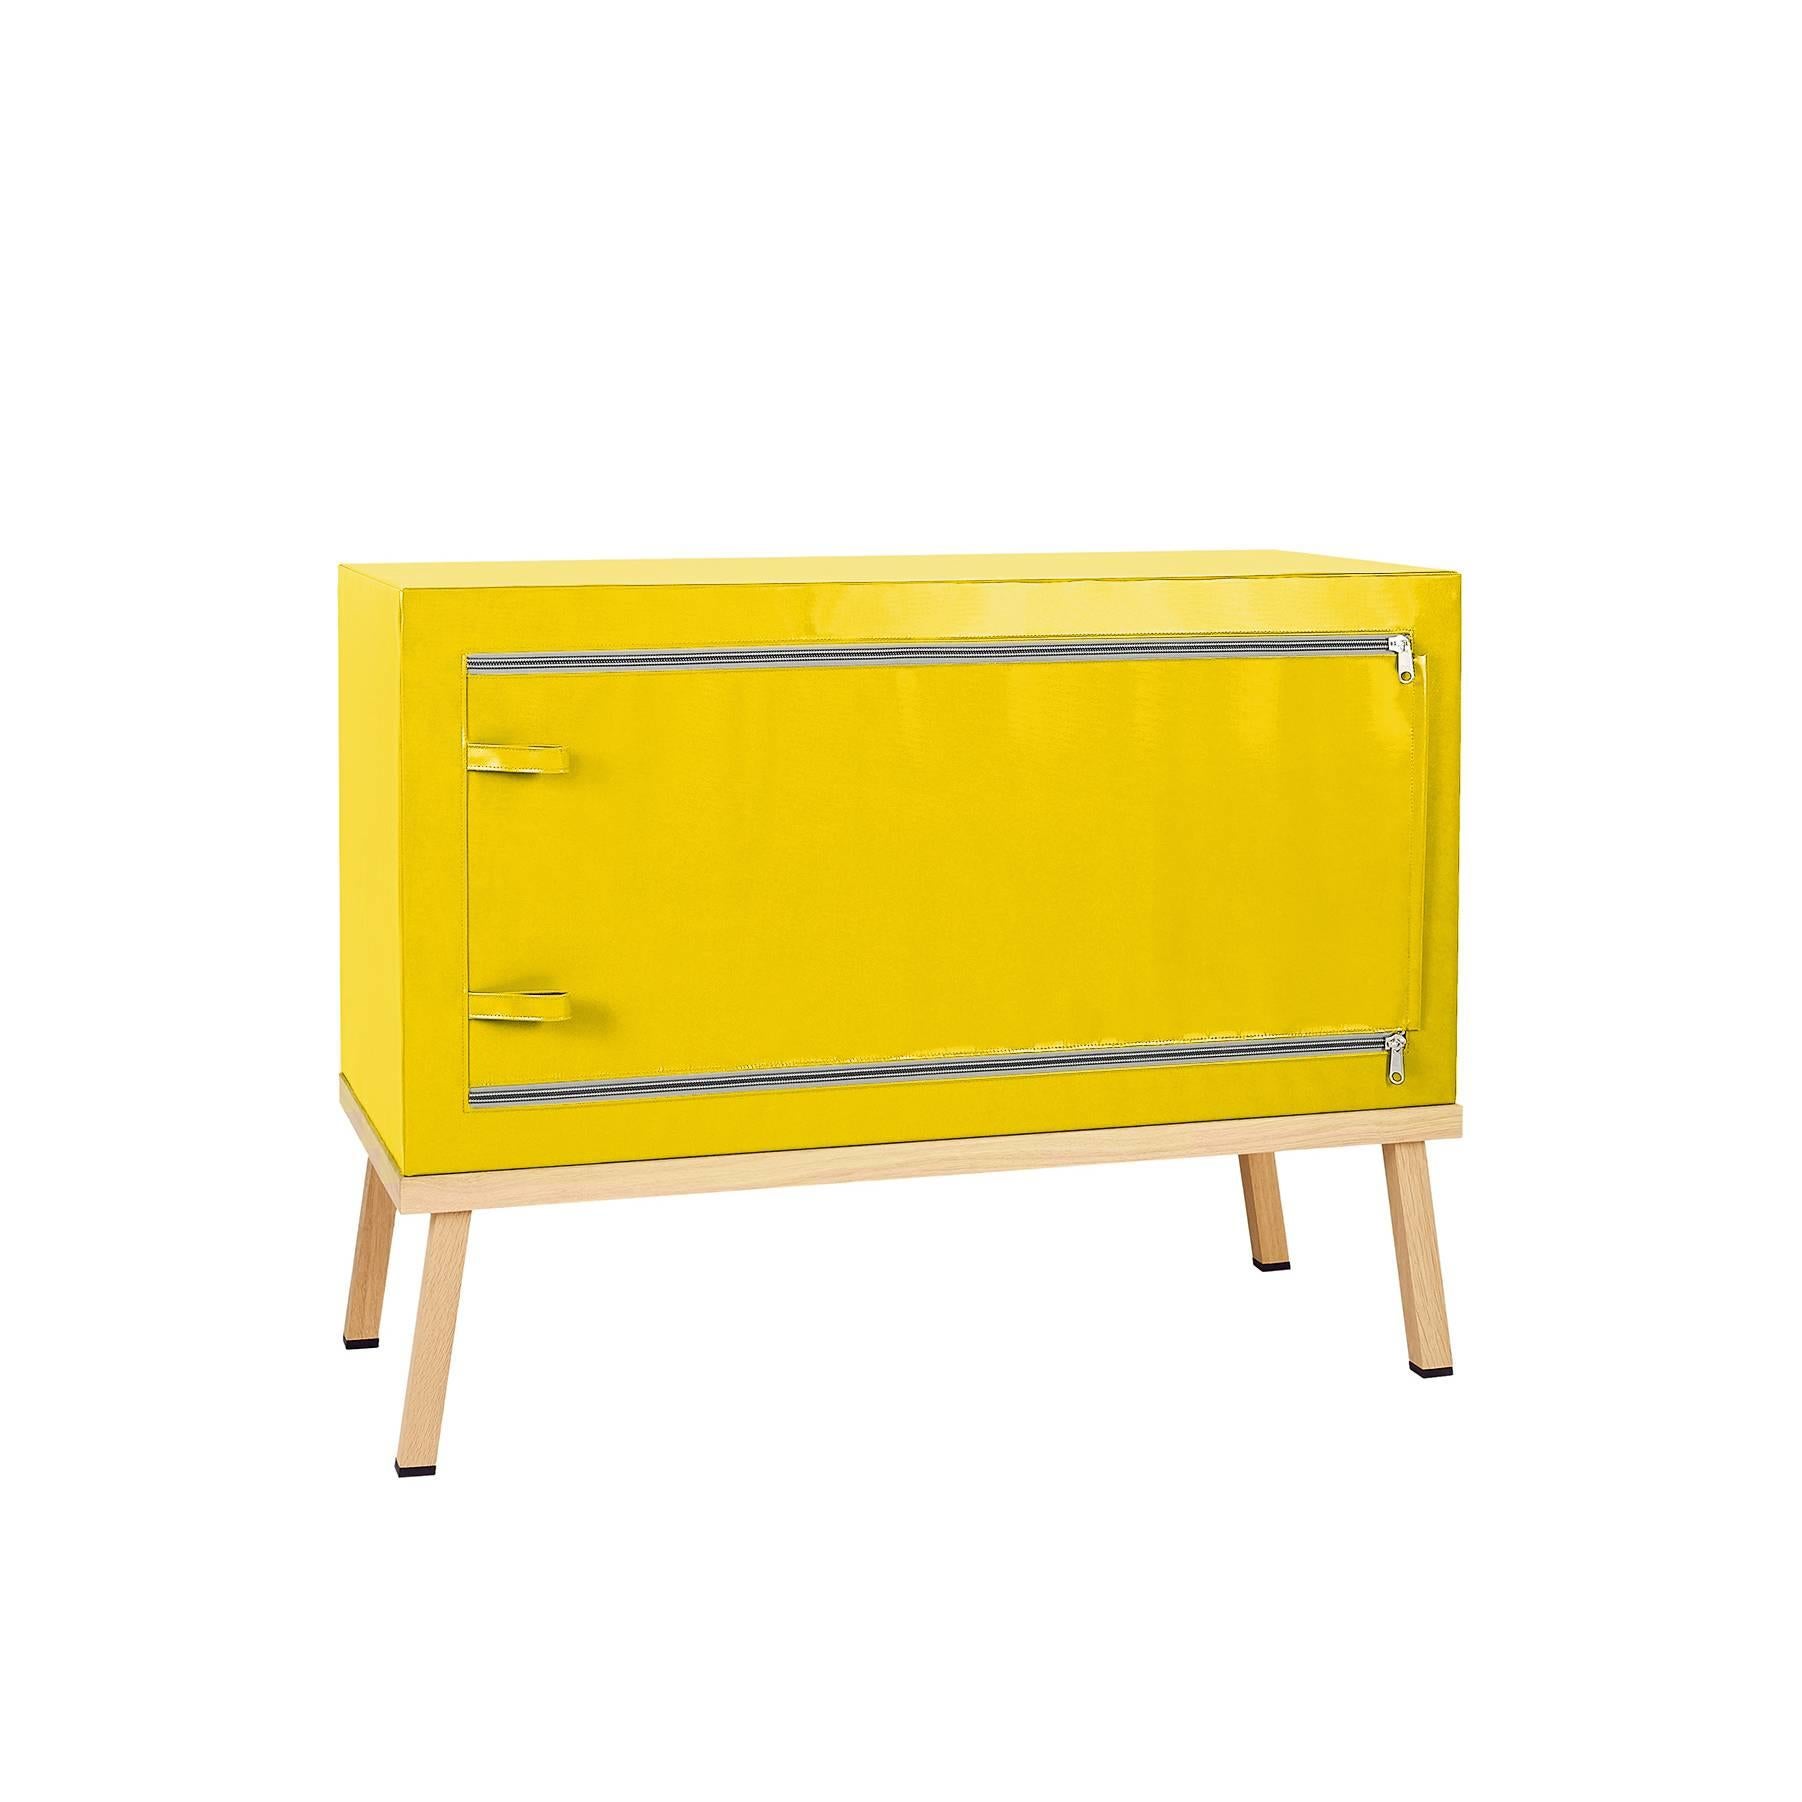 Visser and Meijwaard Truecolors Dresser or Credenza in Yellow PVC Cloth 

Designed by Visser en Meijwaard
Contemporary, Netherlands, 2015
PVC cloth, oakwood, rubber
Measure: H 33.25 in, W 42.75 in, D 19.25 in

Lead time 8-10 weeks

Available in